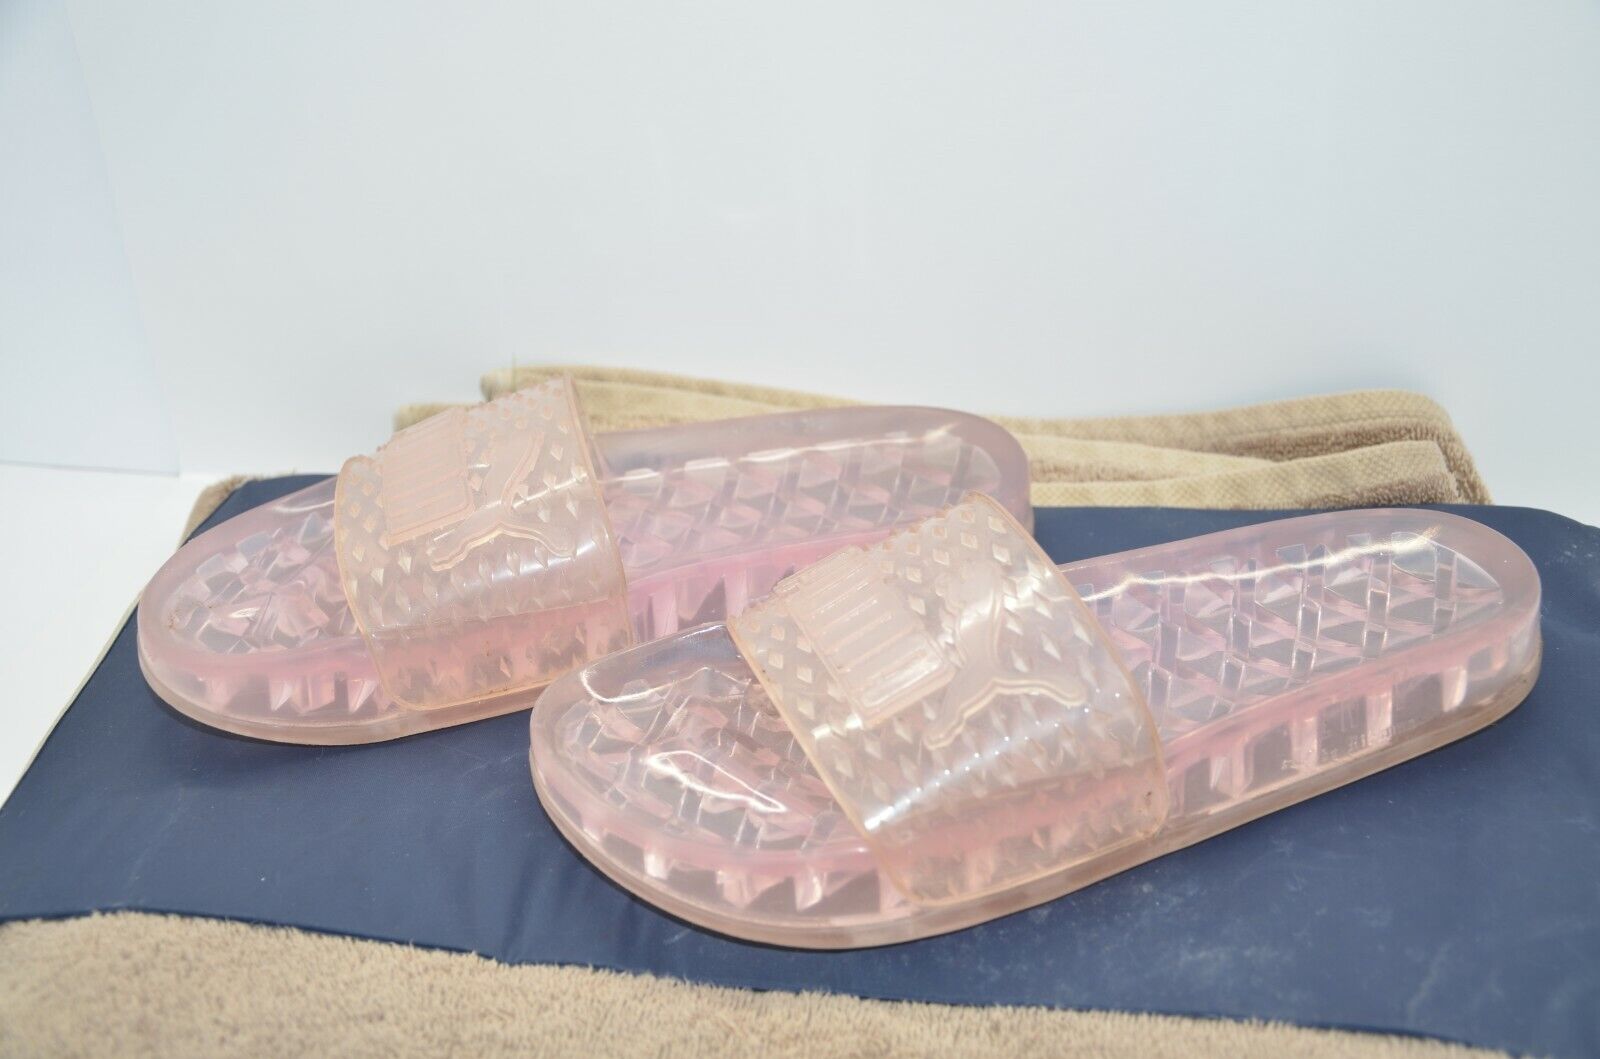 Fenty PUMA X Rihanna Women's Shoes Jelly Pool Slide Sandals Size 